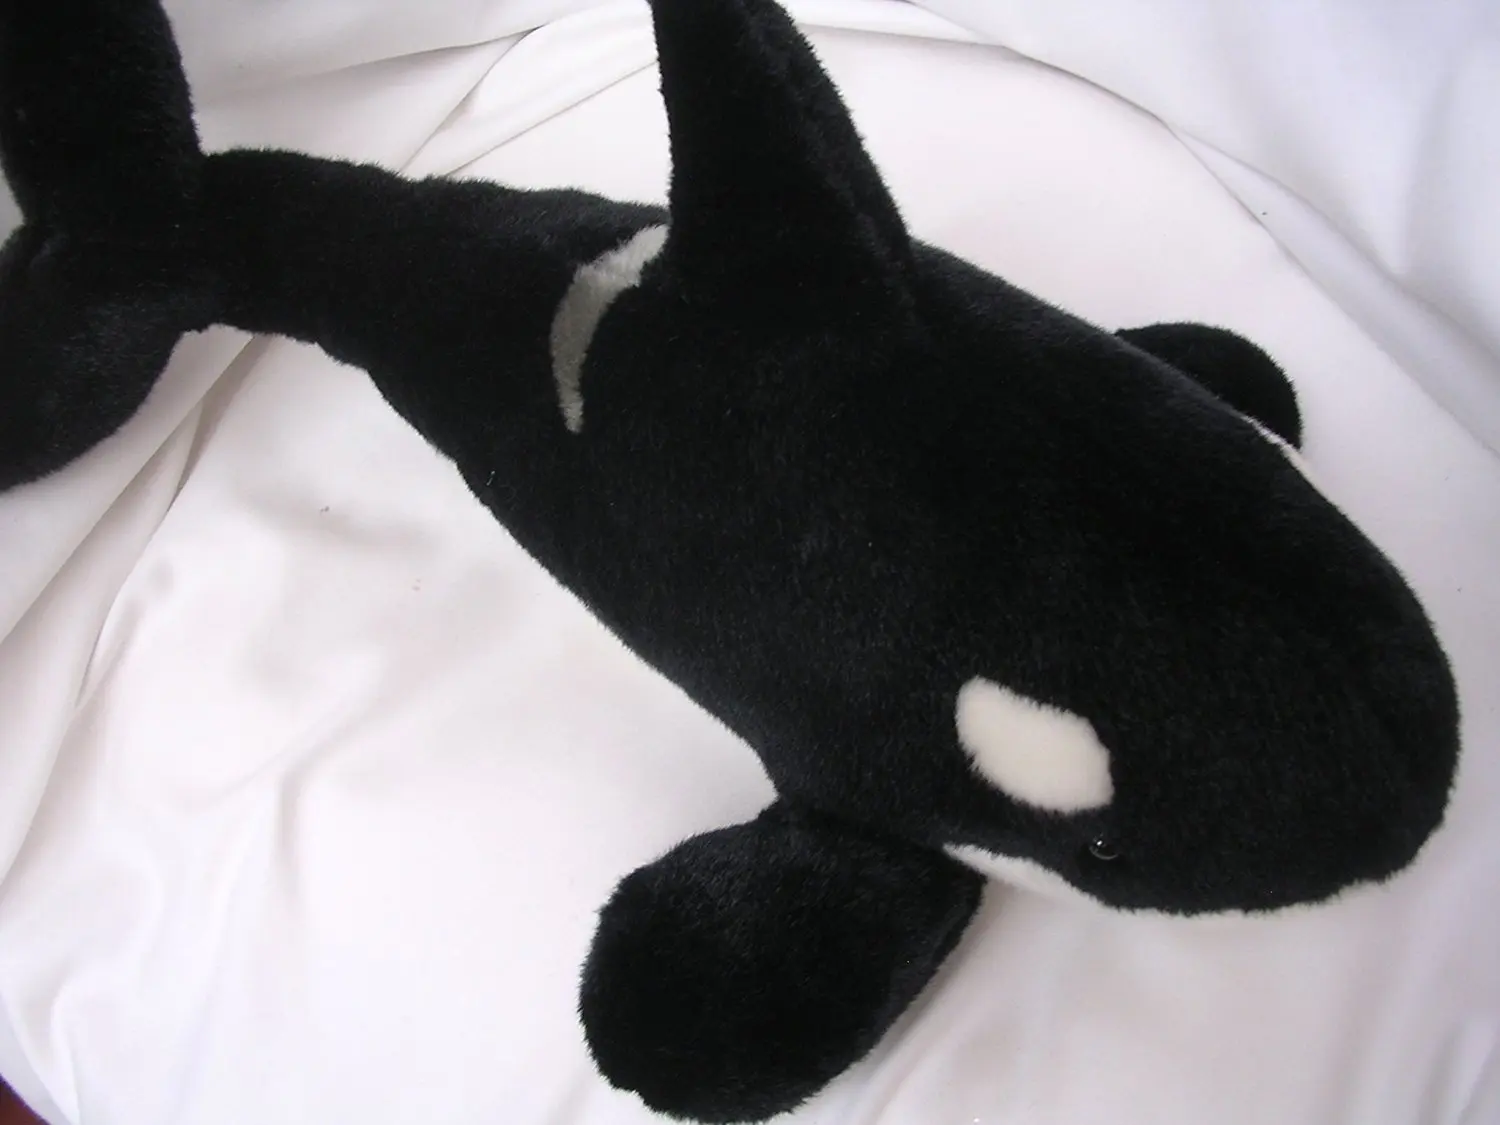 orca plush seaworld